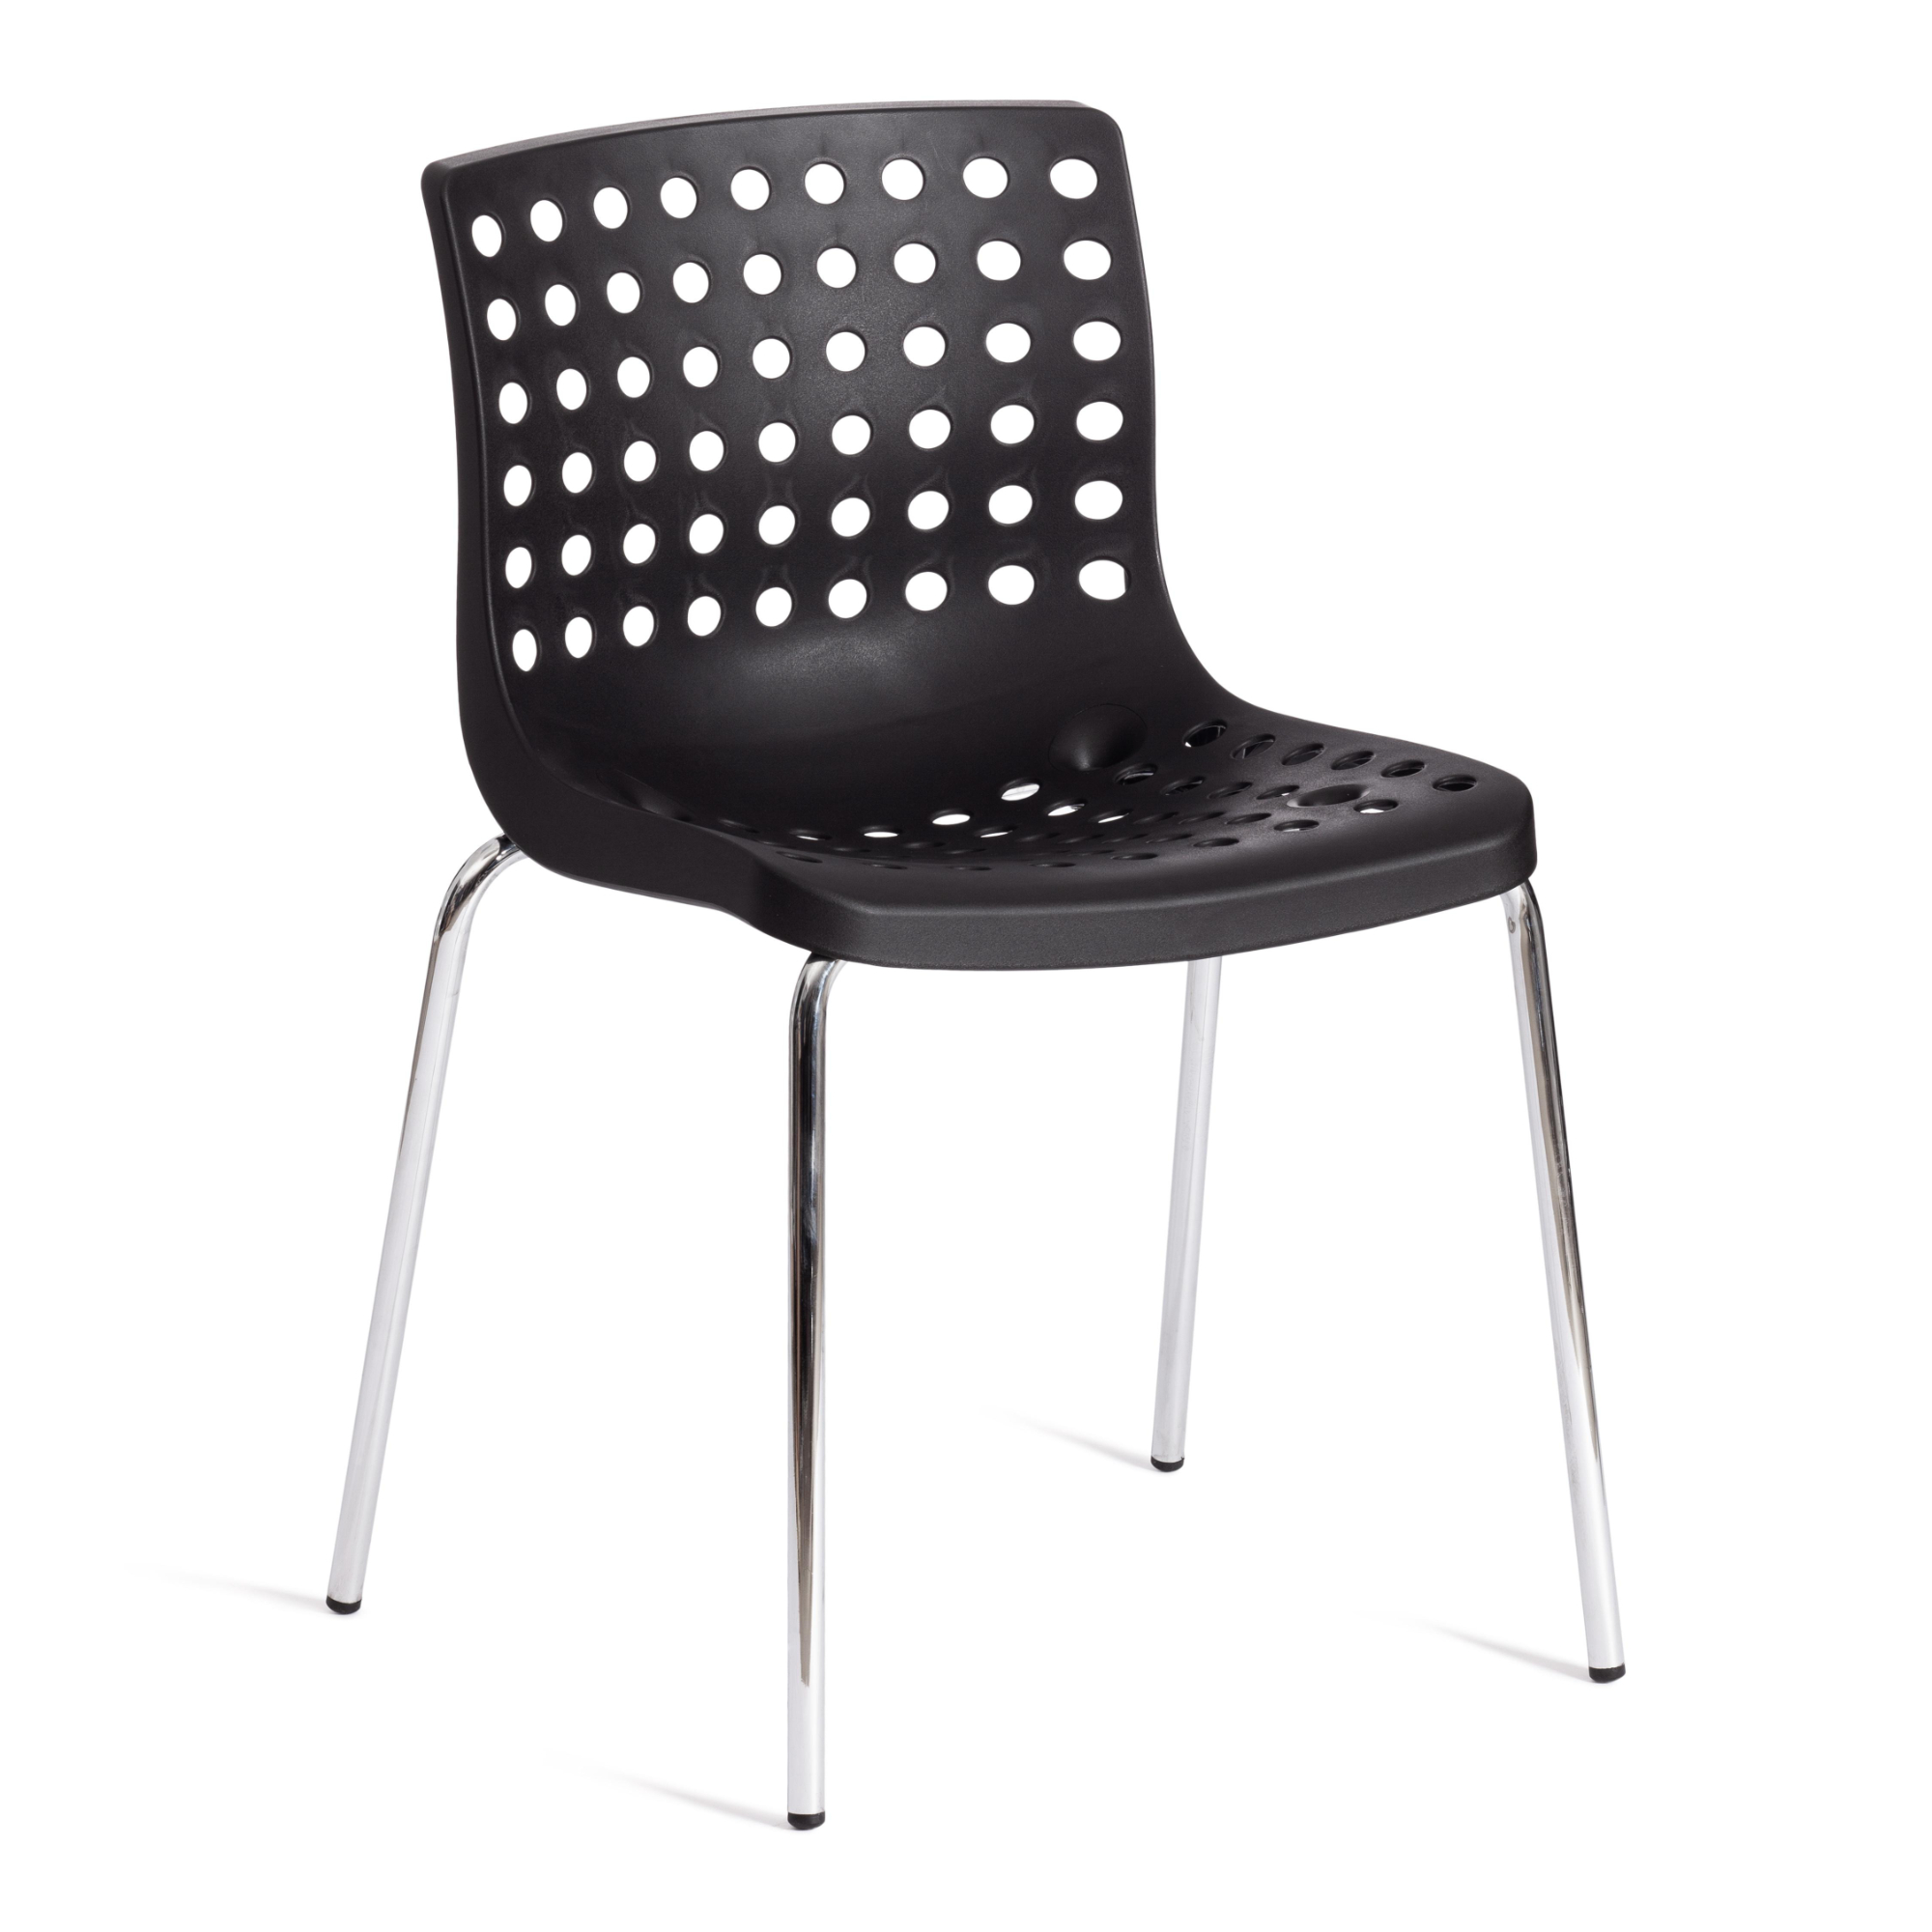 Стул ТС Skalberg пластиковый черный с хромированными ножками 46х56х79 см стул тс cindy chair пластиковый с ножками из бука белый 45х51х82 см